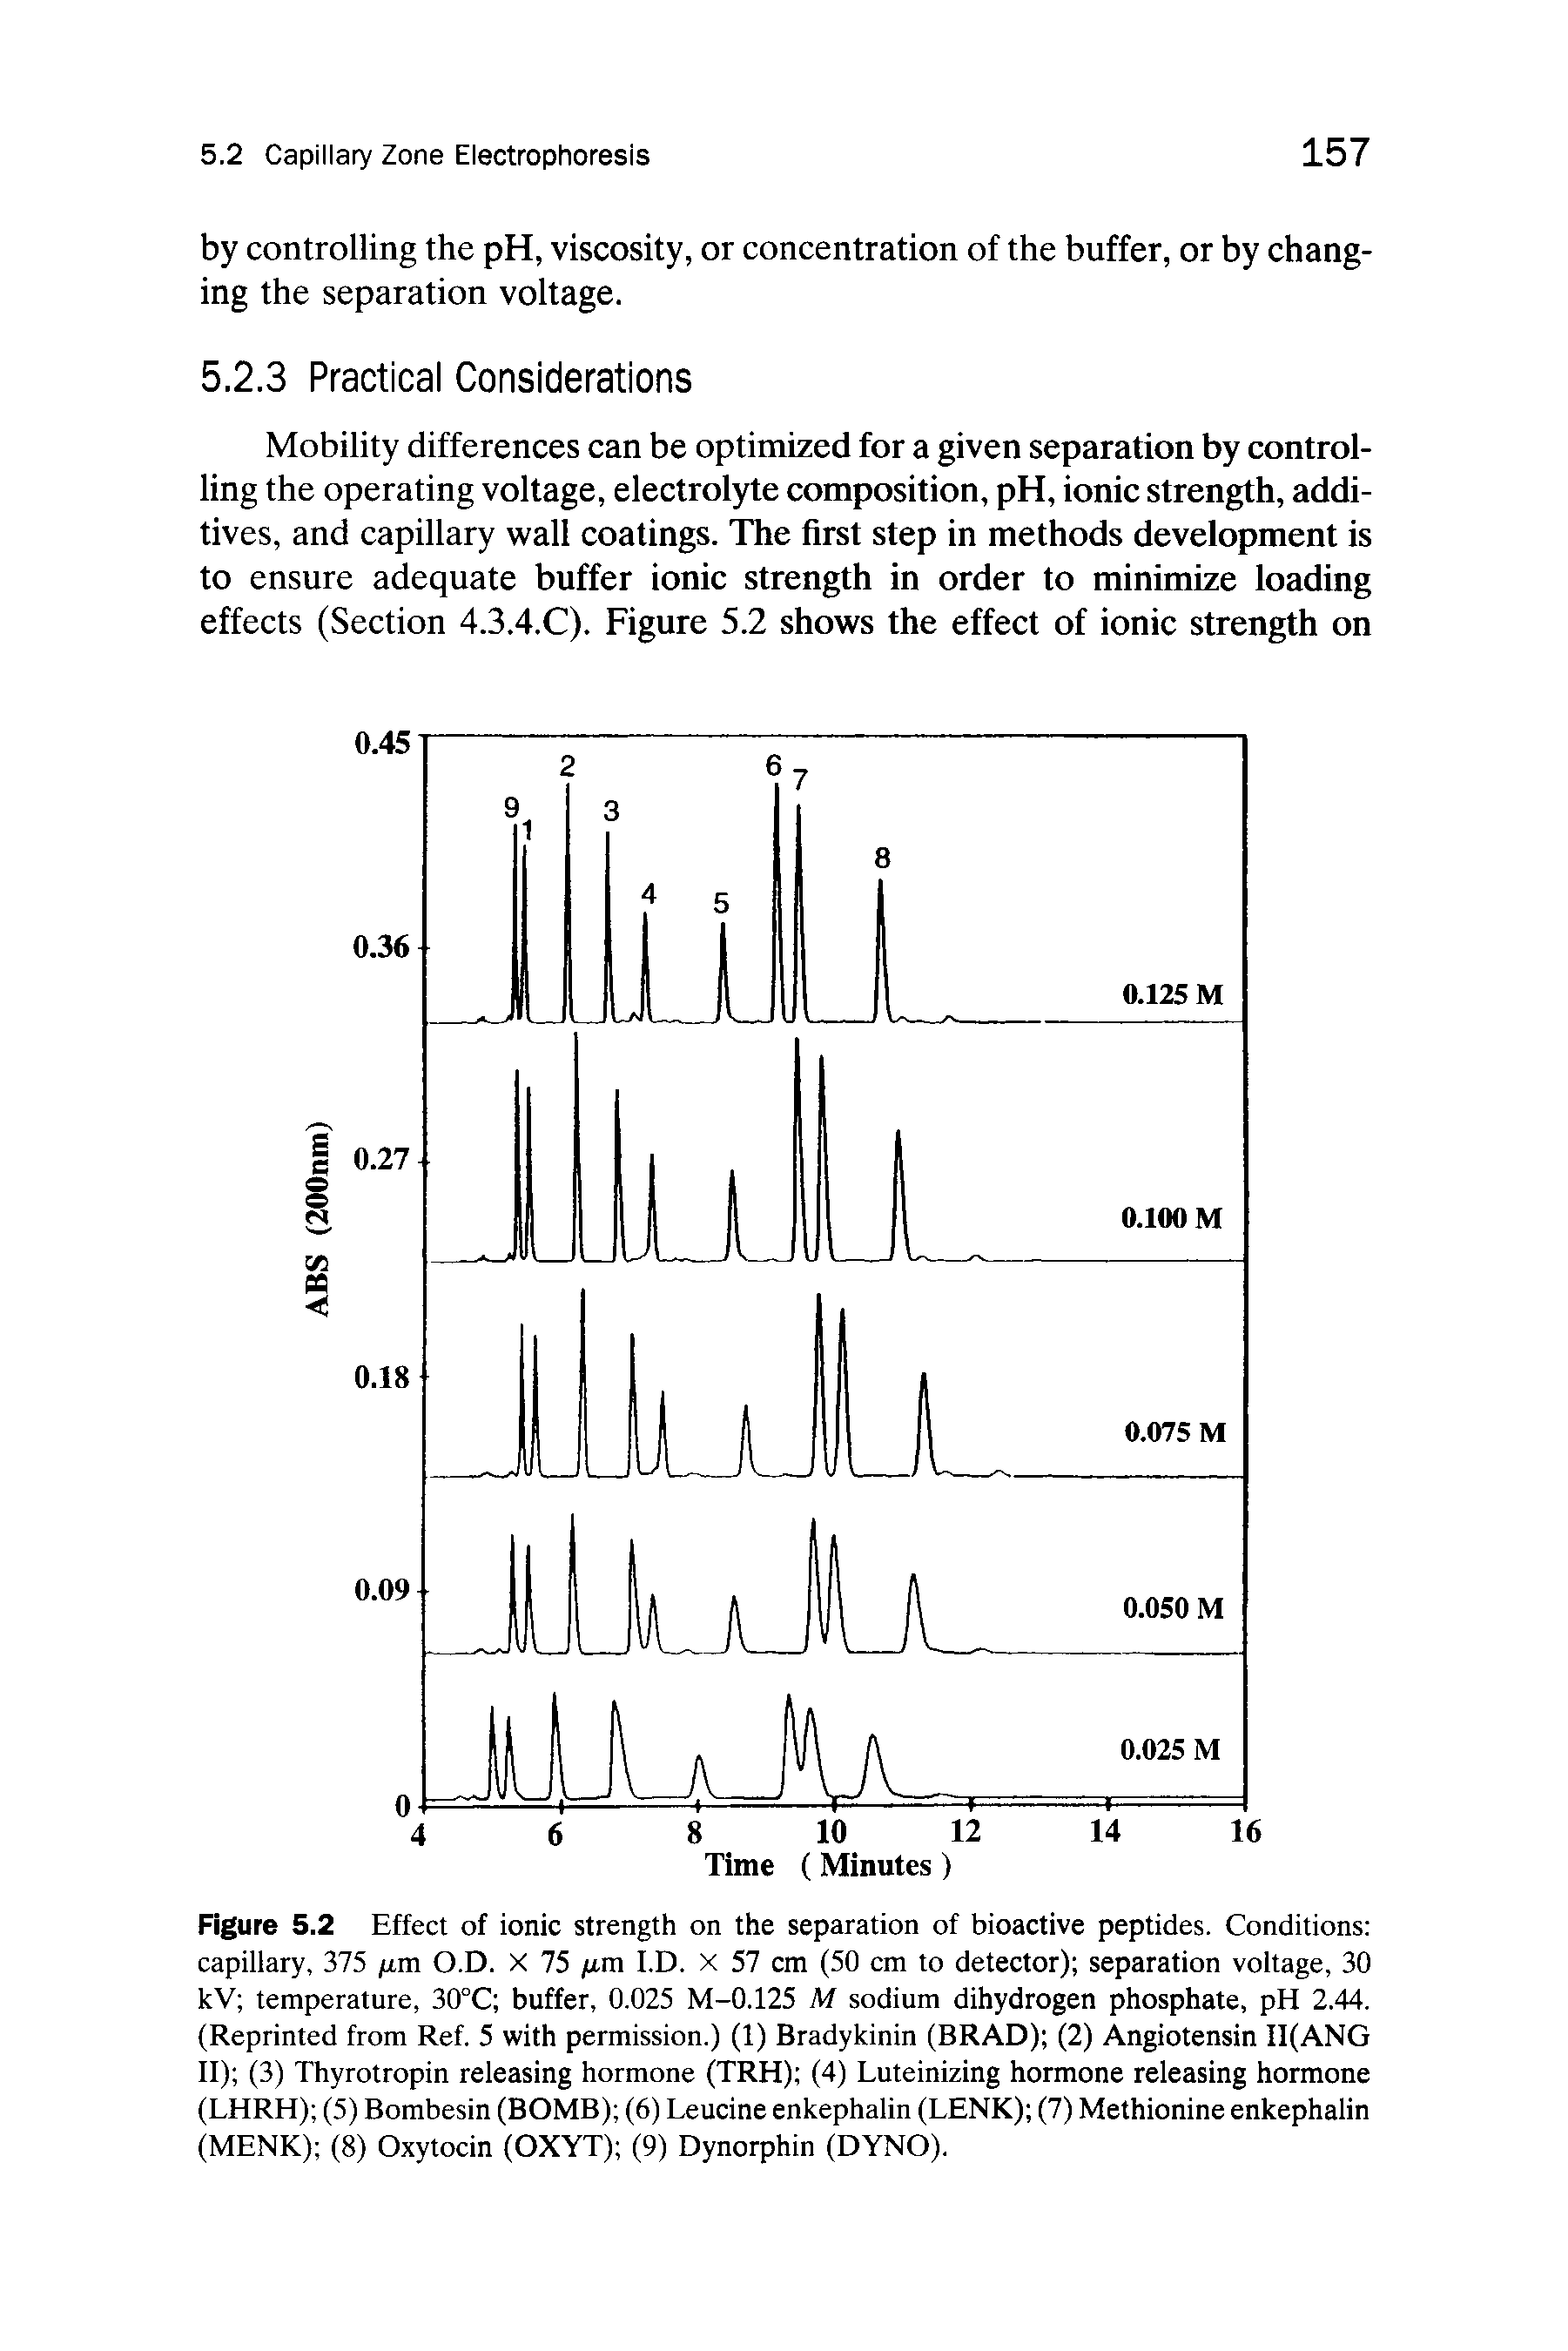 Figure 5.2 Effect of ionic strength on the separation of bioactive peptides. Conditions capillary, 375 gm O.D. X 75 /u.m I.D. x 57 cm (50 cm to detector) separation voltage, 30 kV temperature, 30°C buffer, 0.025 M-0.125 M sodium dihydrogen phosphate, pH 2.44. (Reprinted from Ref. 5 with permission.) (1) Bradykinin (BRAD) (2) Angiotensin II(ANG II) (3) Thyrotropin releasing hormone (TRH) (4) Luteinizing hormone releasing hormone (LHRH) (5) Bombesin (BOMB) (6) Leucine enkephalin (LENK) (7) Methionine enkephalin (MENK) (8) Oxytocin (OXYT) (9) Dynorphin (DYNO).